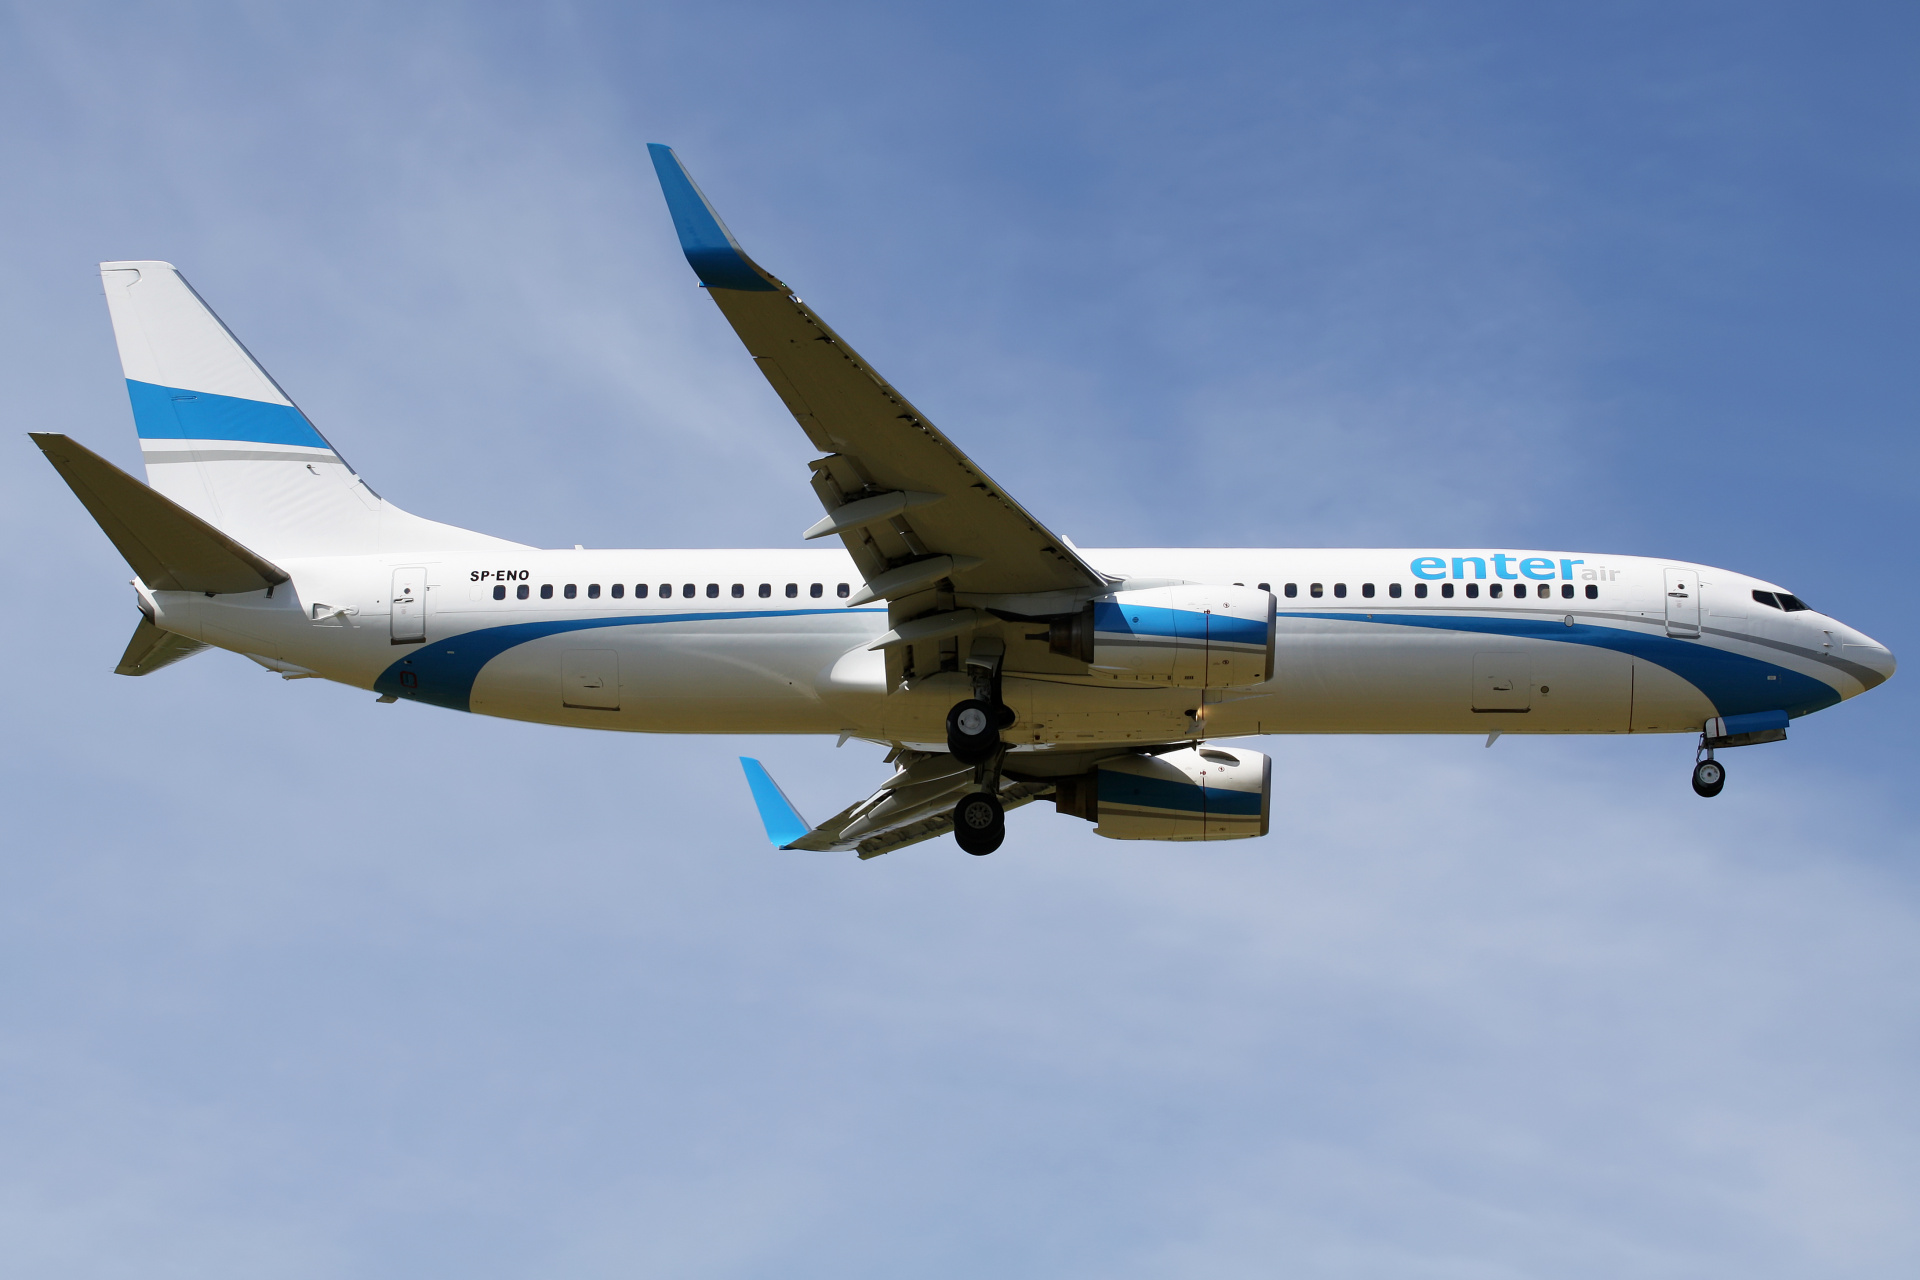 SP-ENO (Samoloty » Spotting na EPWA » Boeing 737-800 » Enter Air)